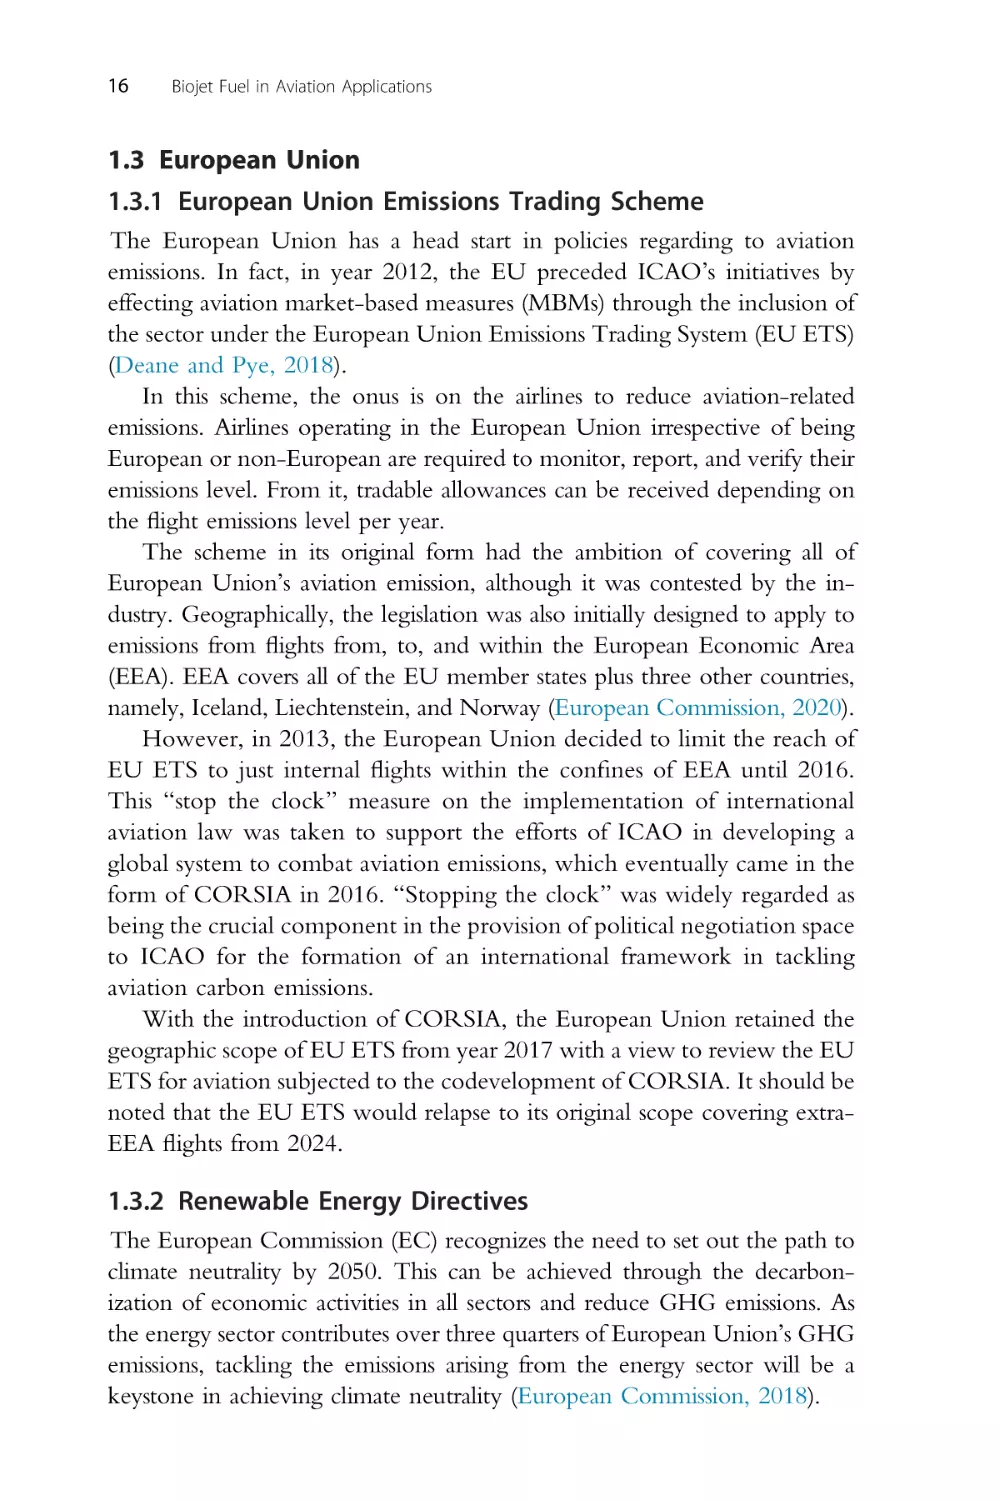 1.3 European Union
1.3.1 European Union Emissions Trading Scheme
1.3.2 Renewable Energy Directives